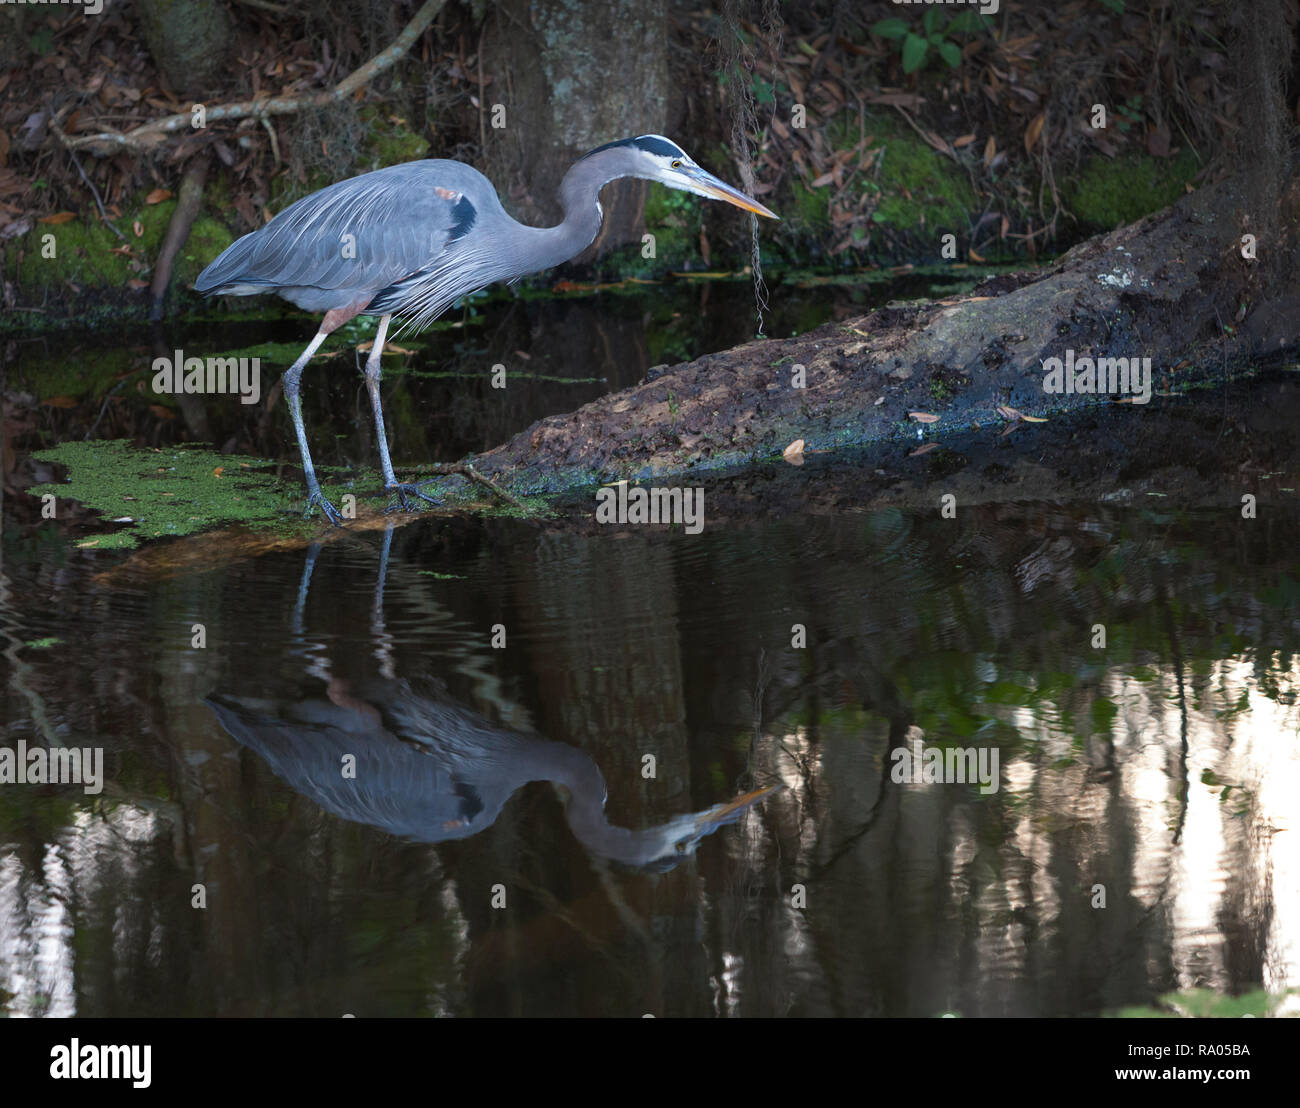 A great blue heron (Ardea herodias) stalking prey in a Florida wetland. Stock Photo